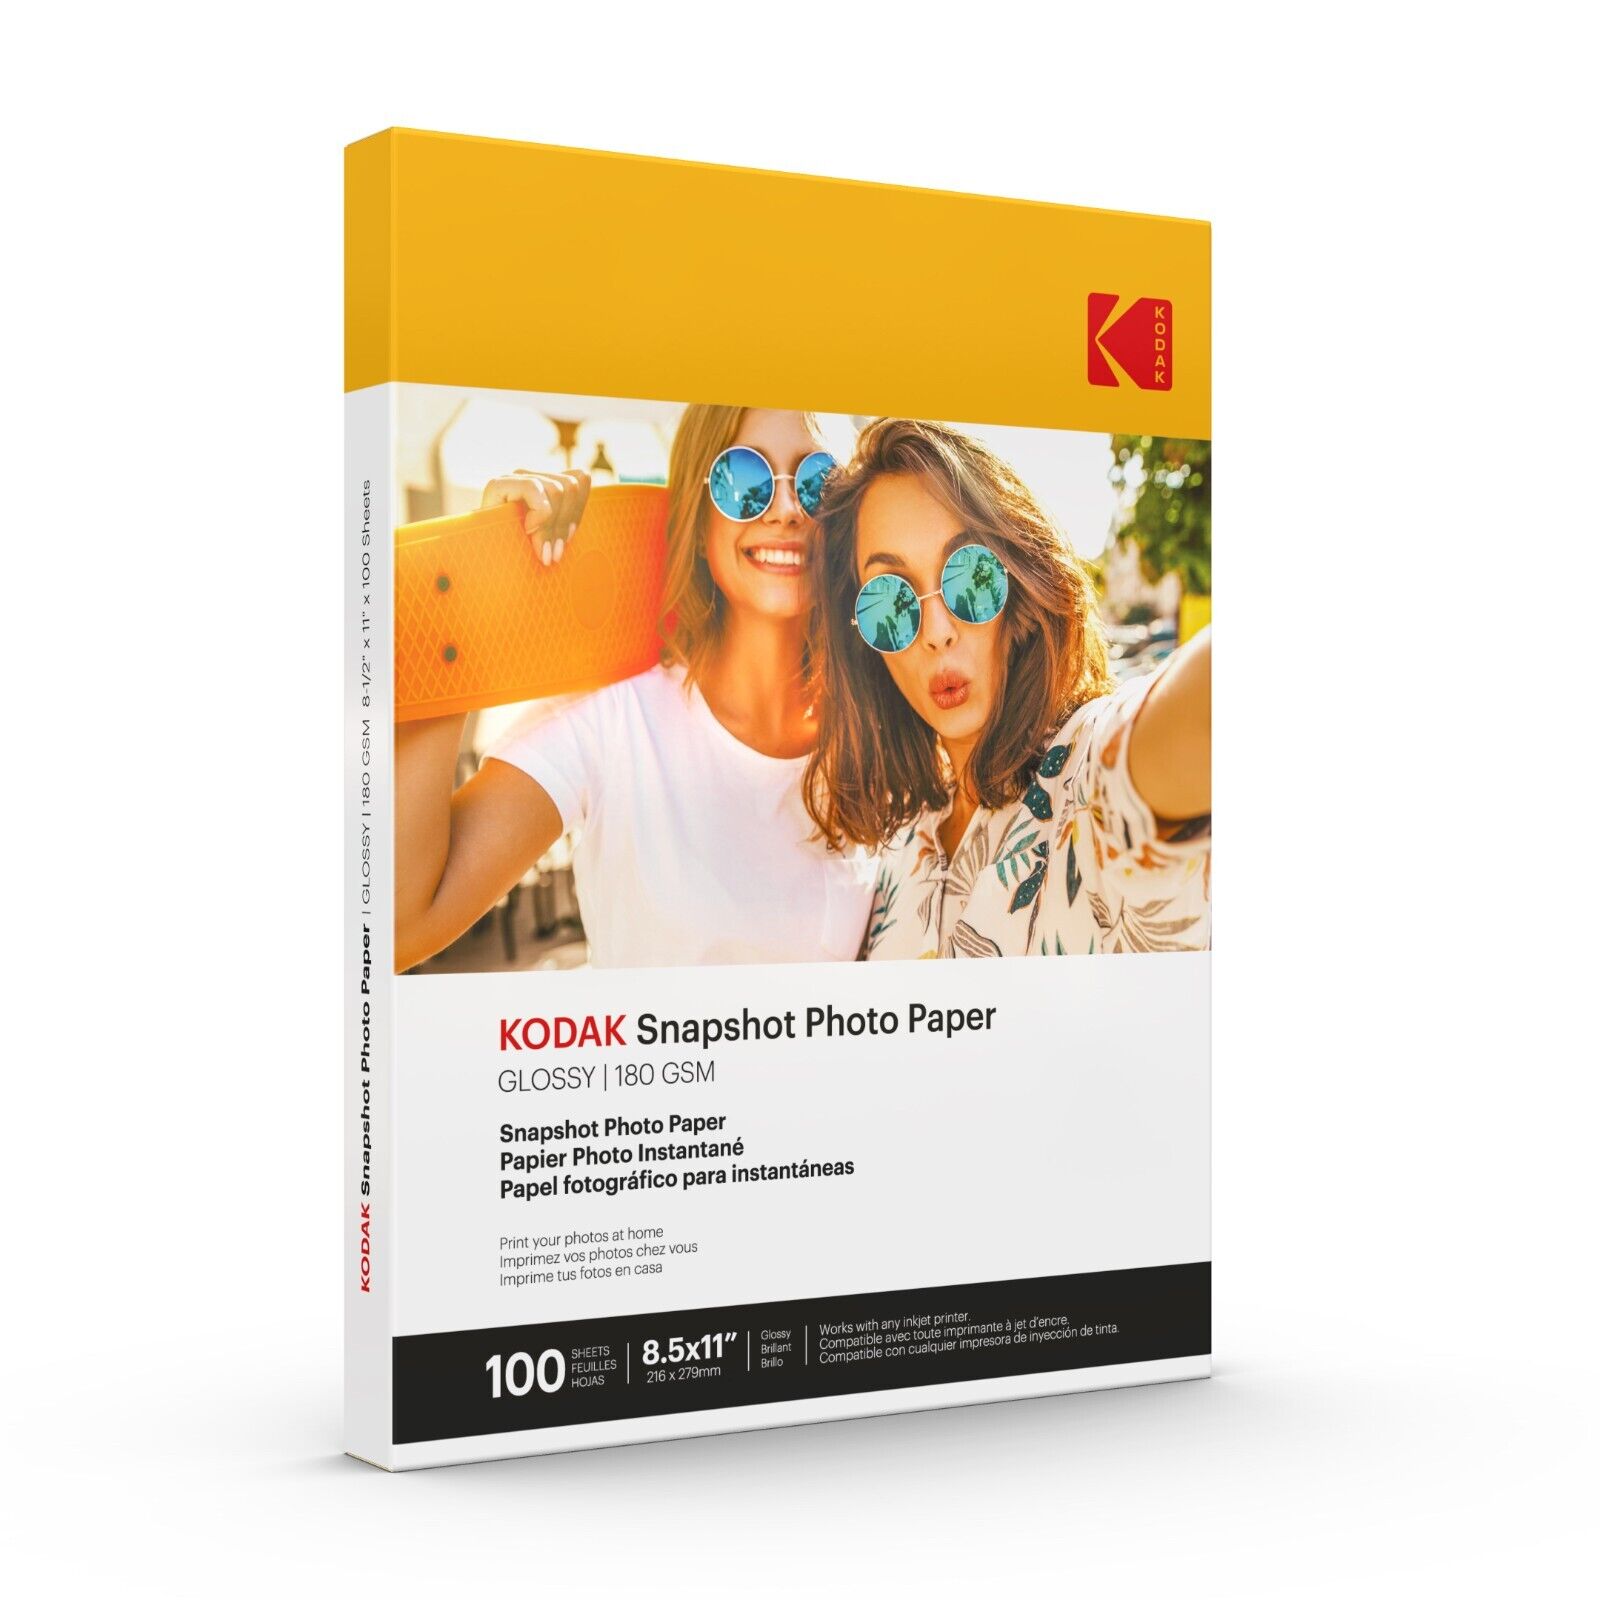 PHOTO PAPER KODAK Photo Paper Gloss 8.5 X 11 SNAPSHOT 100 count, 48lb. 180 g/m 2